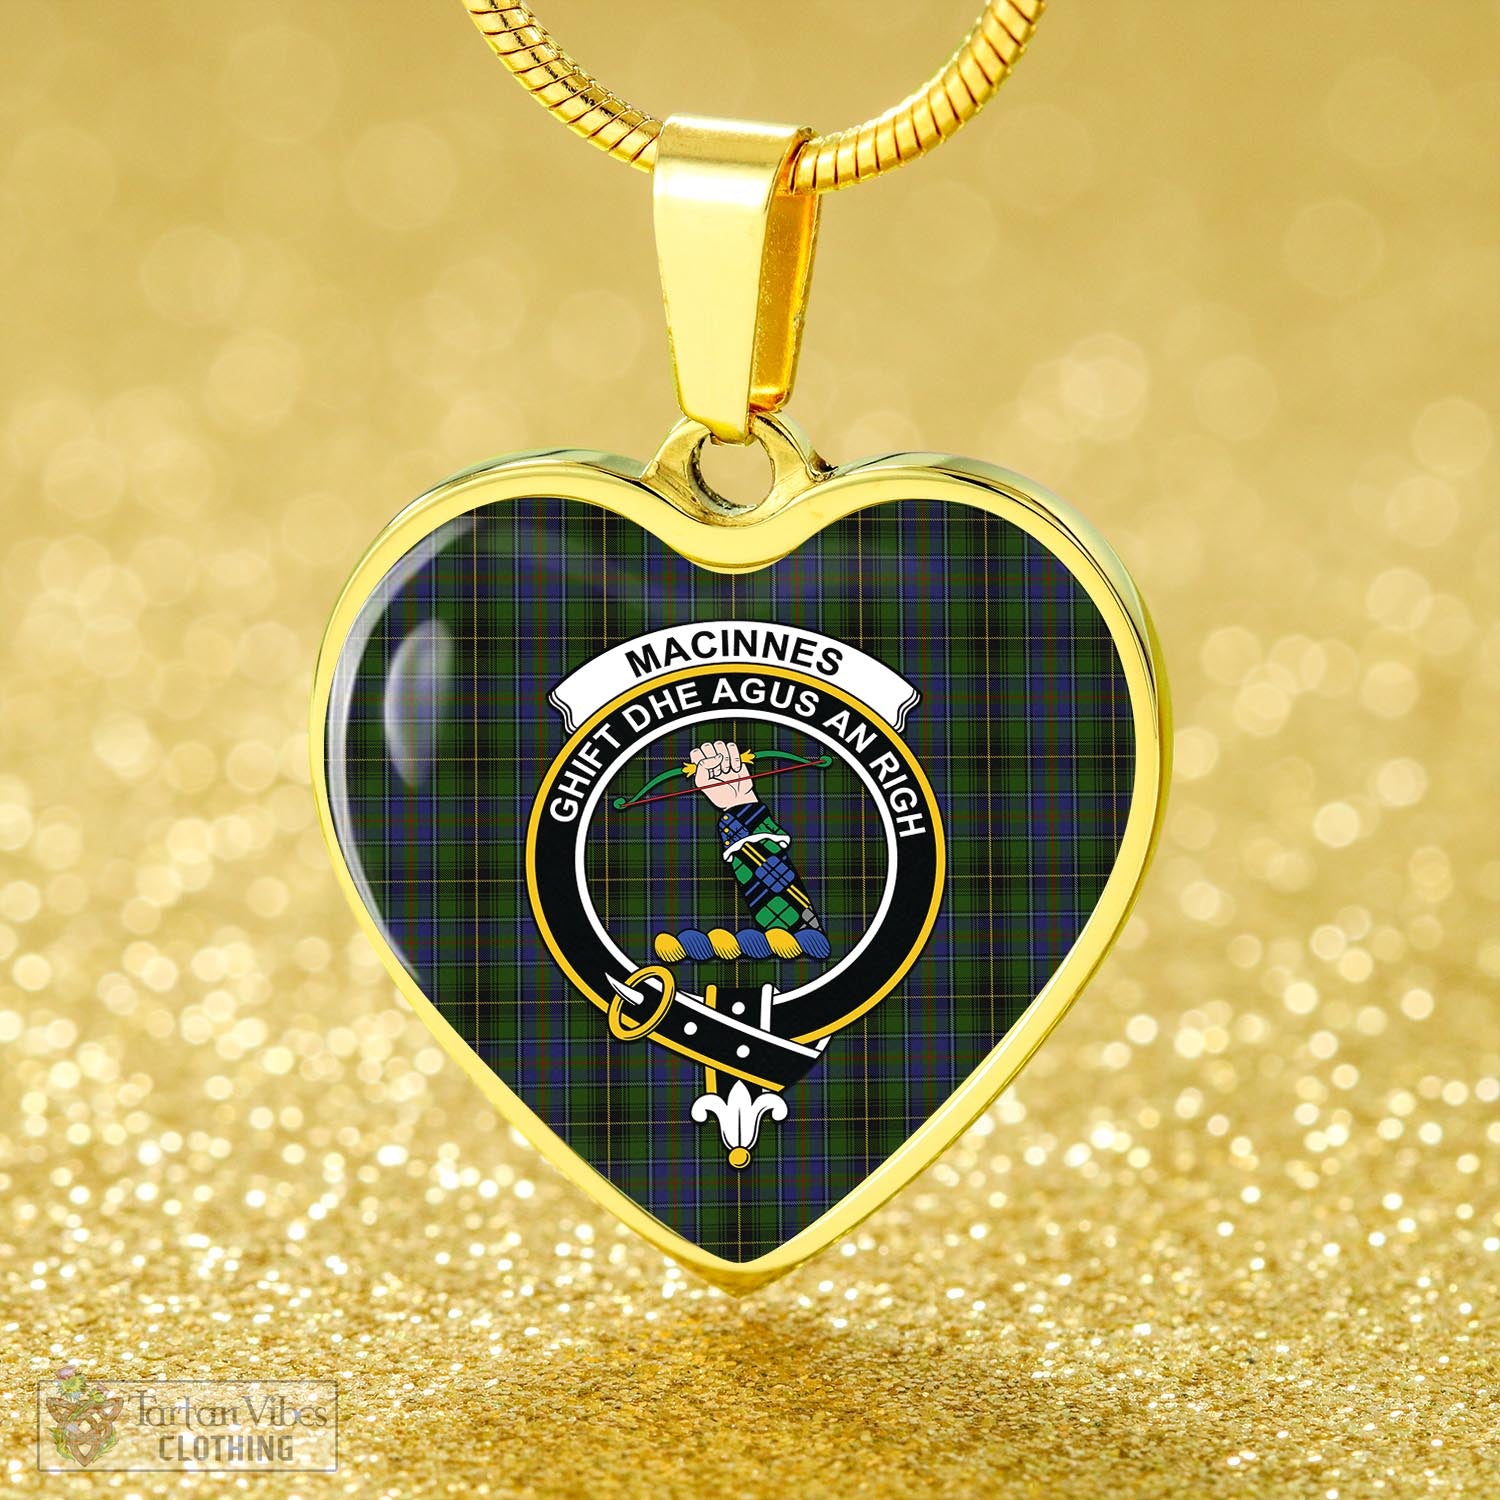 Tartan Vibes Clothing MacInnes Tartan Heart Necklace with Family Crest